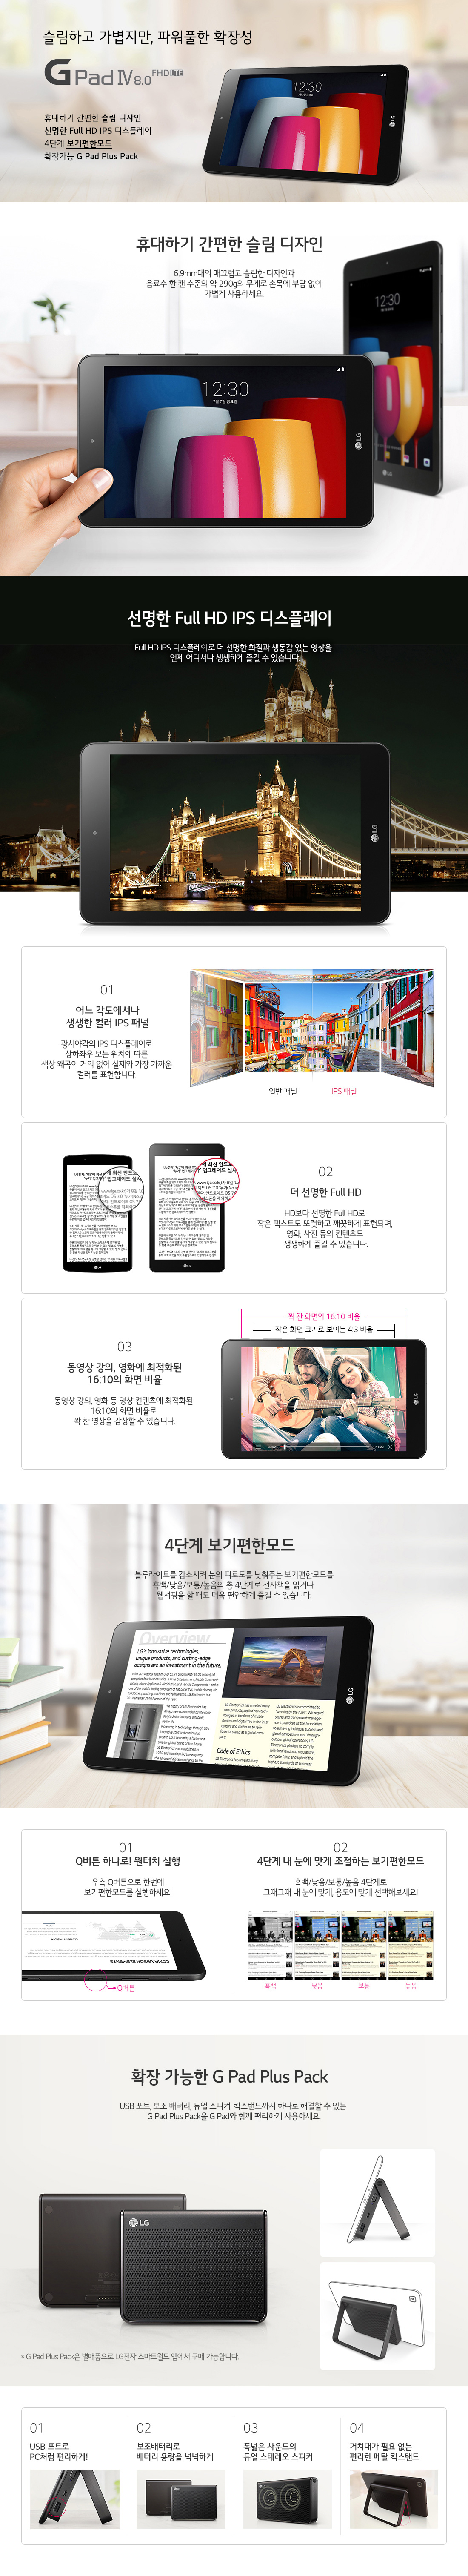 LG G패드4 8.0 상품정보